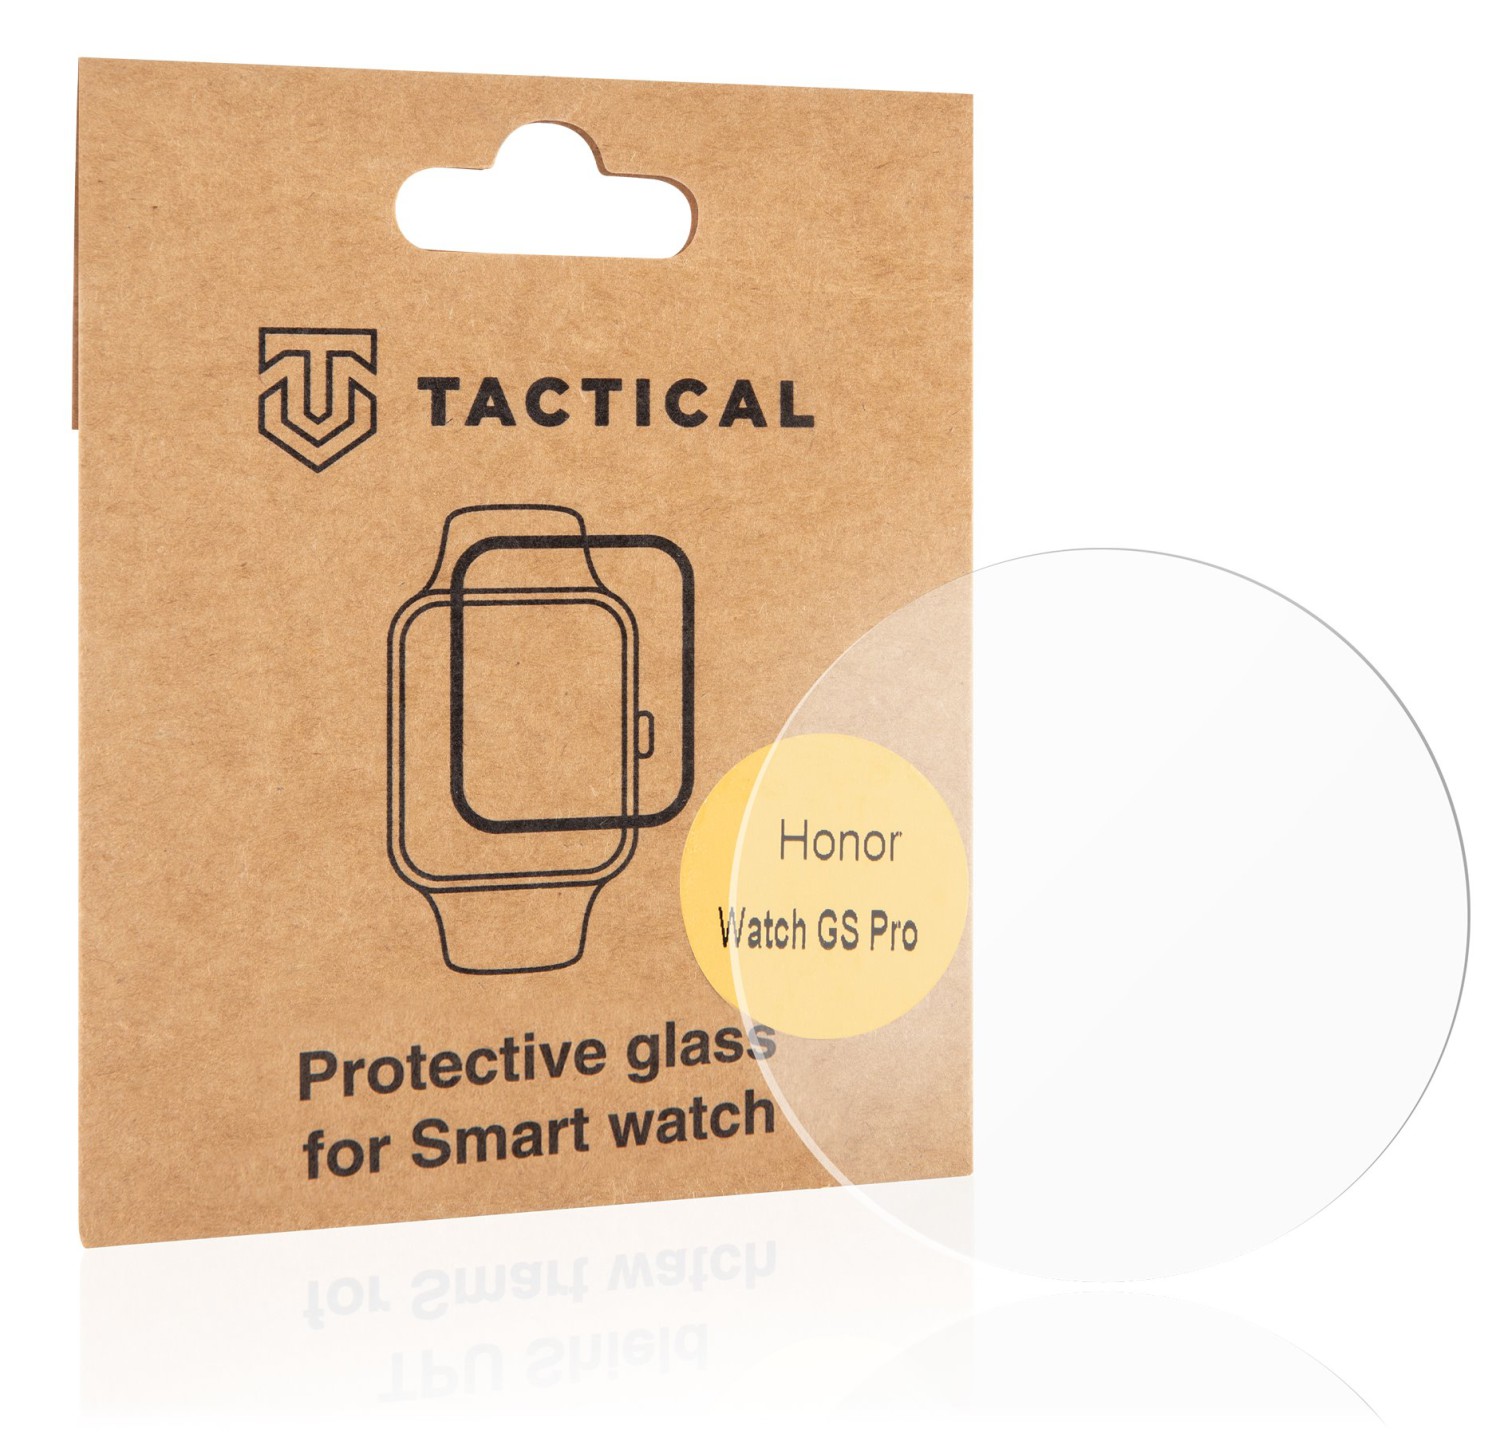 Ochranné sklo Tactical Glass Shield pre Honor Watch GS Pro